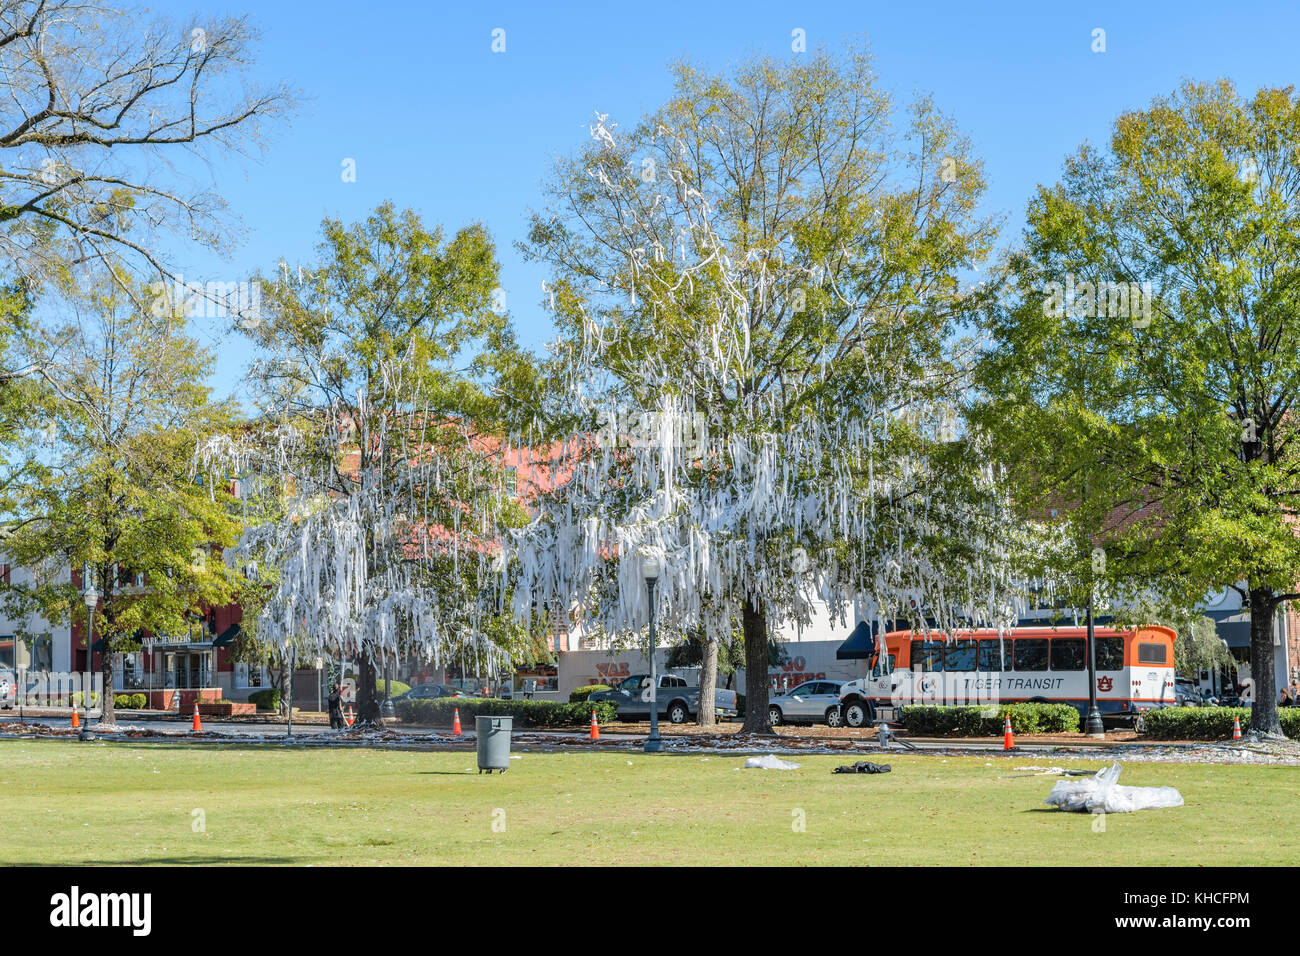 Pulire fino a toomer's corner, rimozione bianco carta igienica da alberi, dopo una vittoria di Auburn University football team. auburn ALABAMA, Stati Uniti d'America. Foto Stock